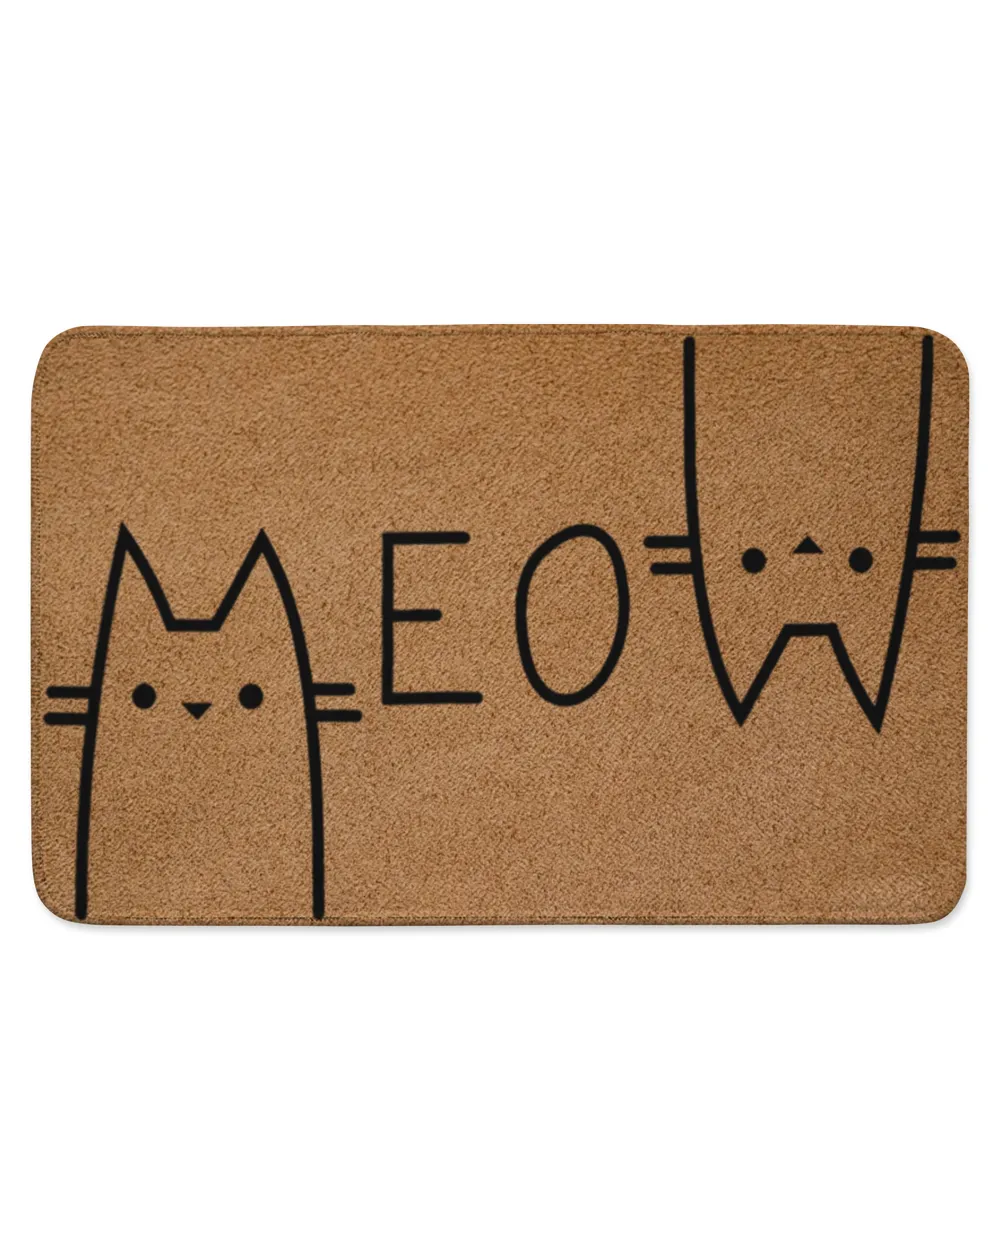 Meow Meow Cat Doormat HOC190323DRM2